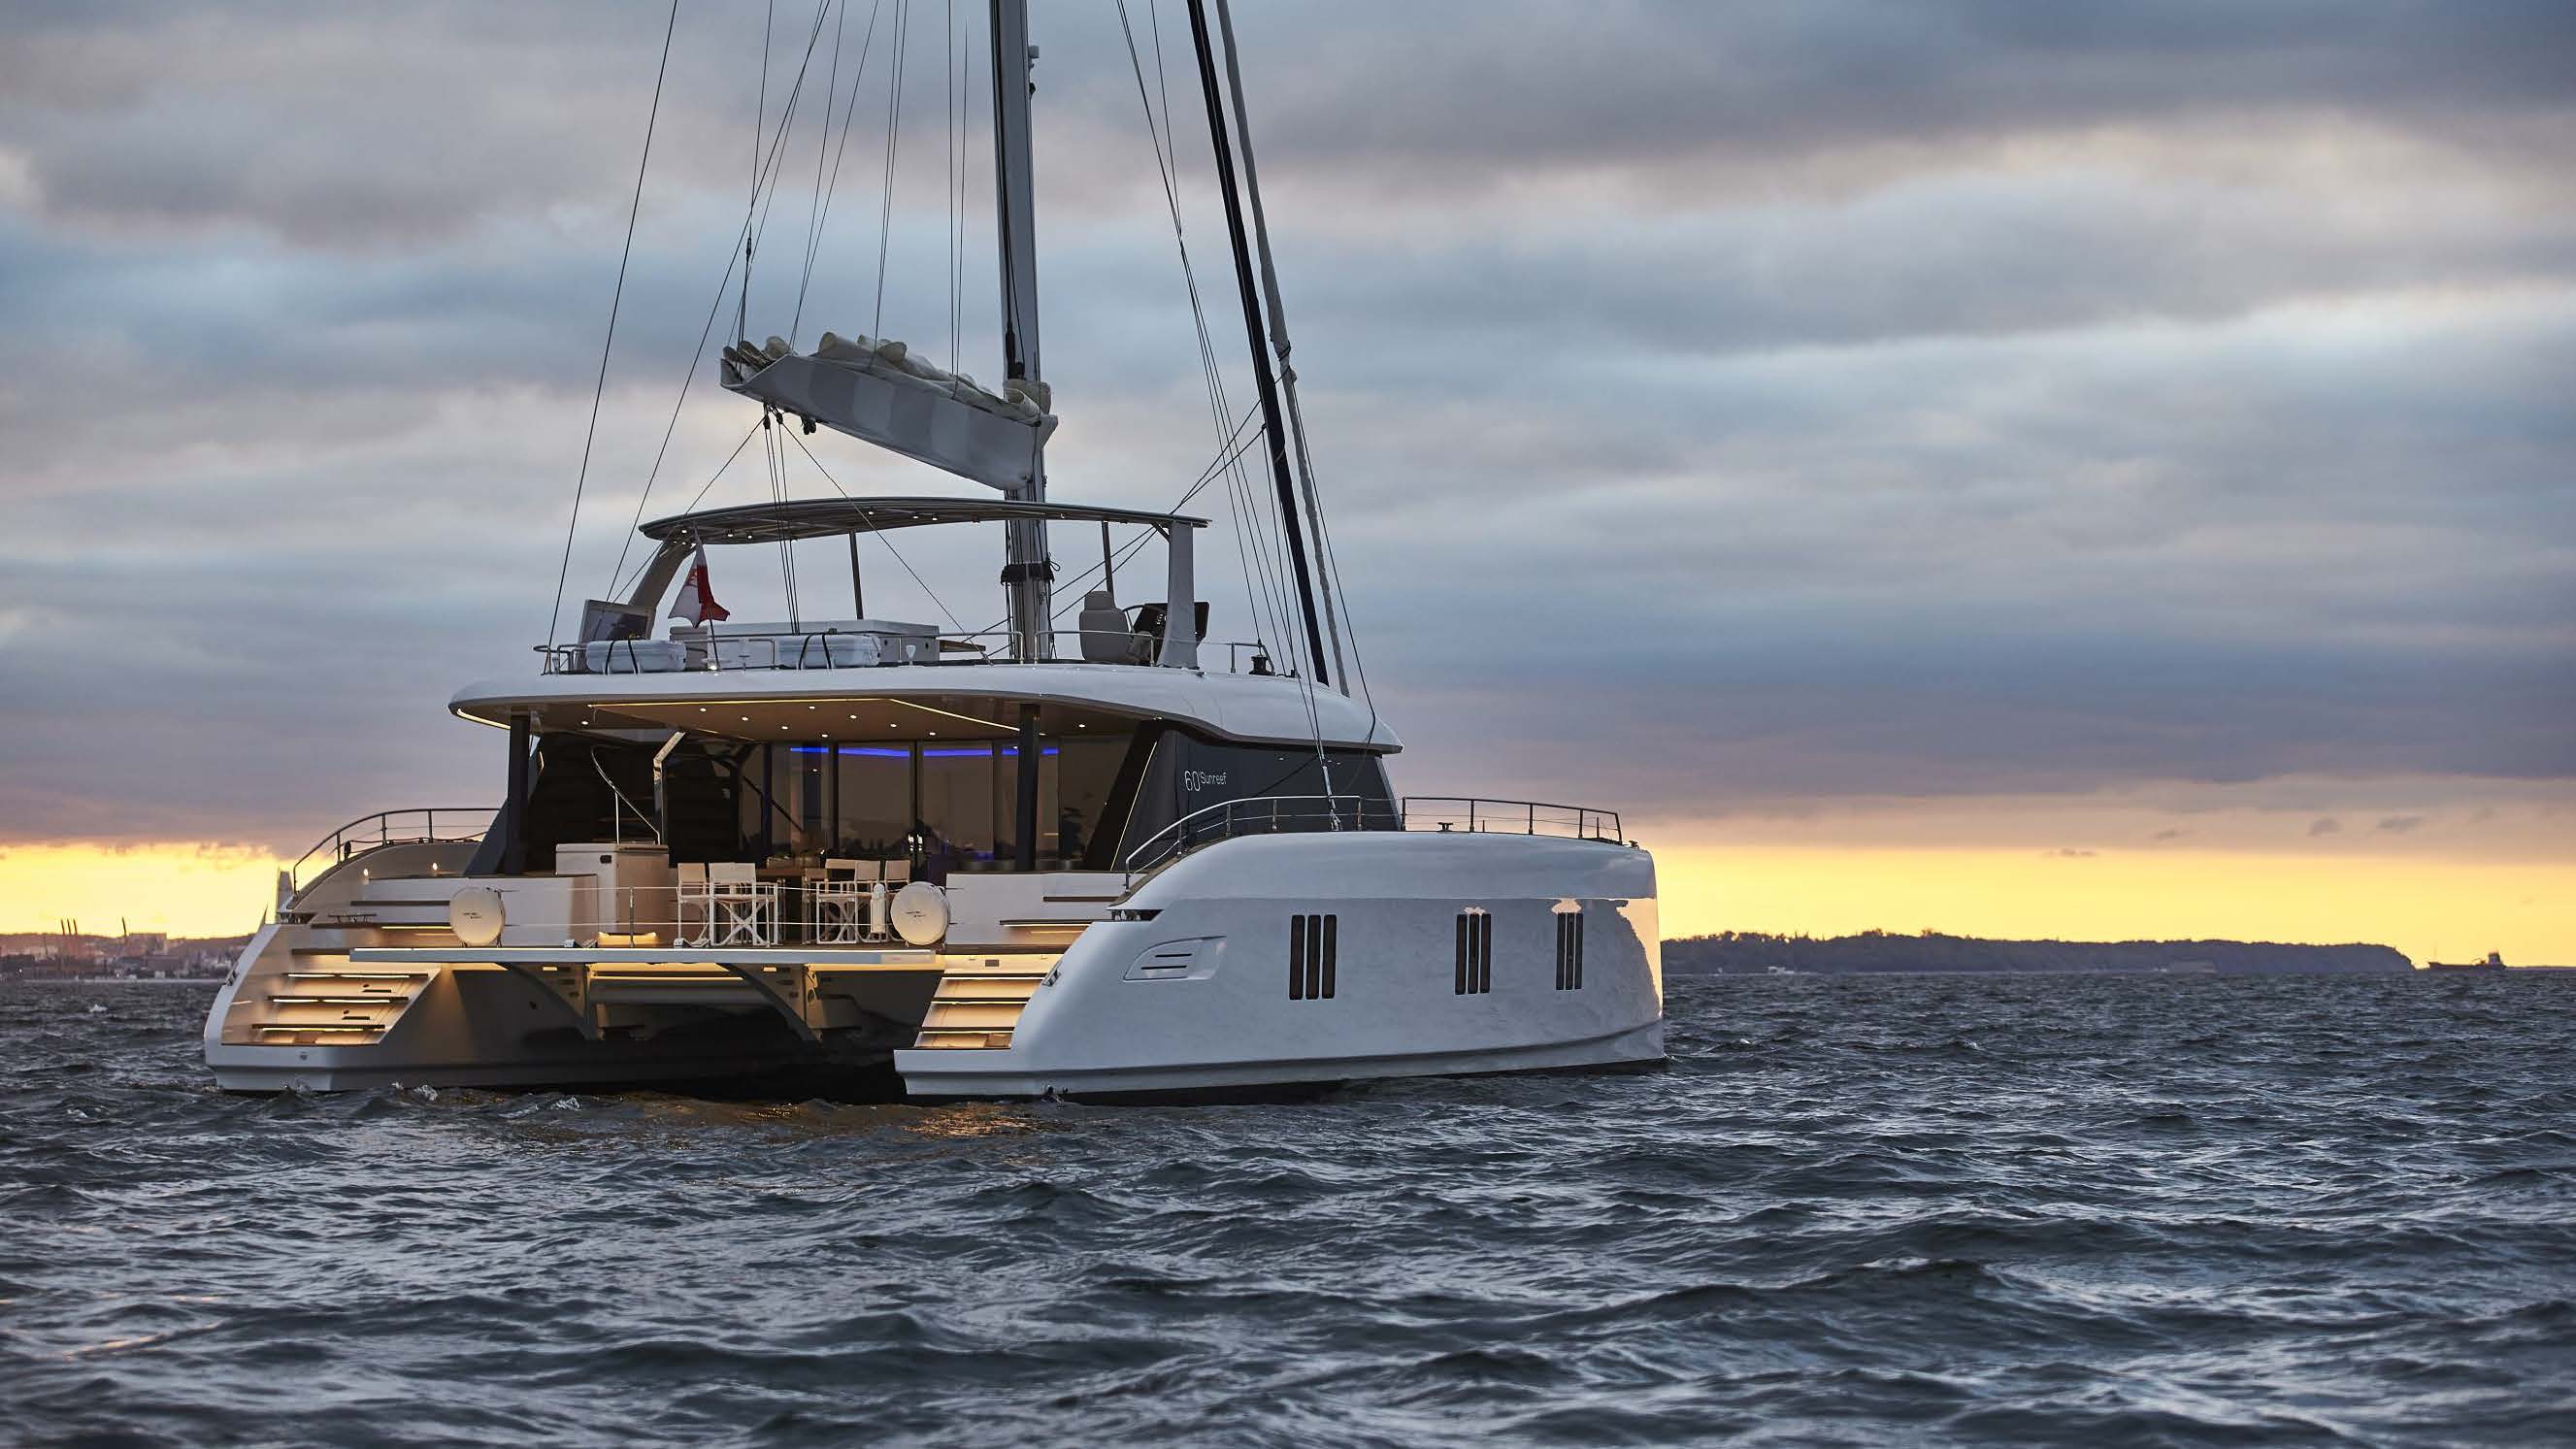 New Sail Catamaran for Sale  Sunreef 60 Boat Highlights